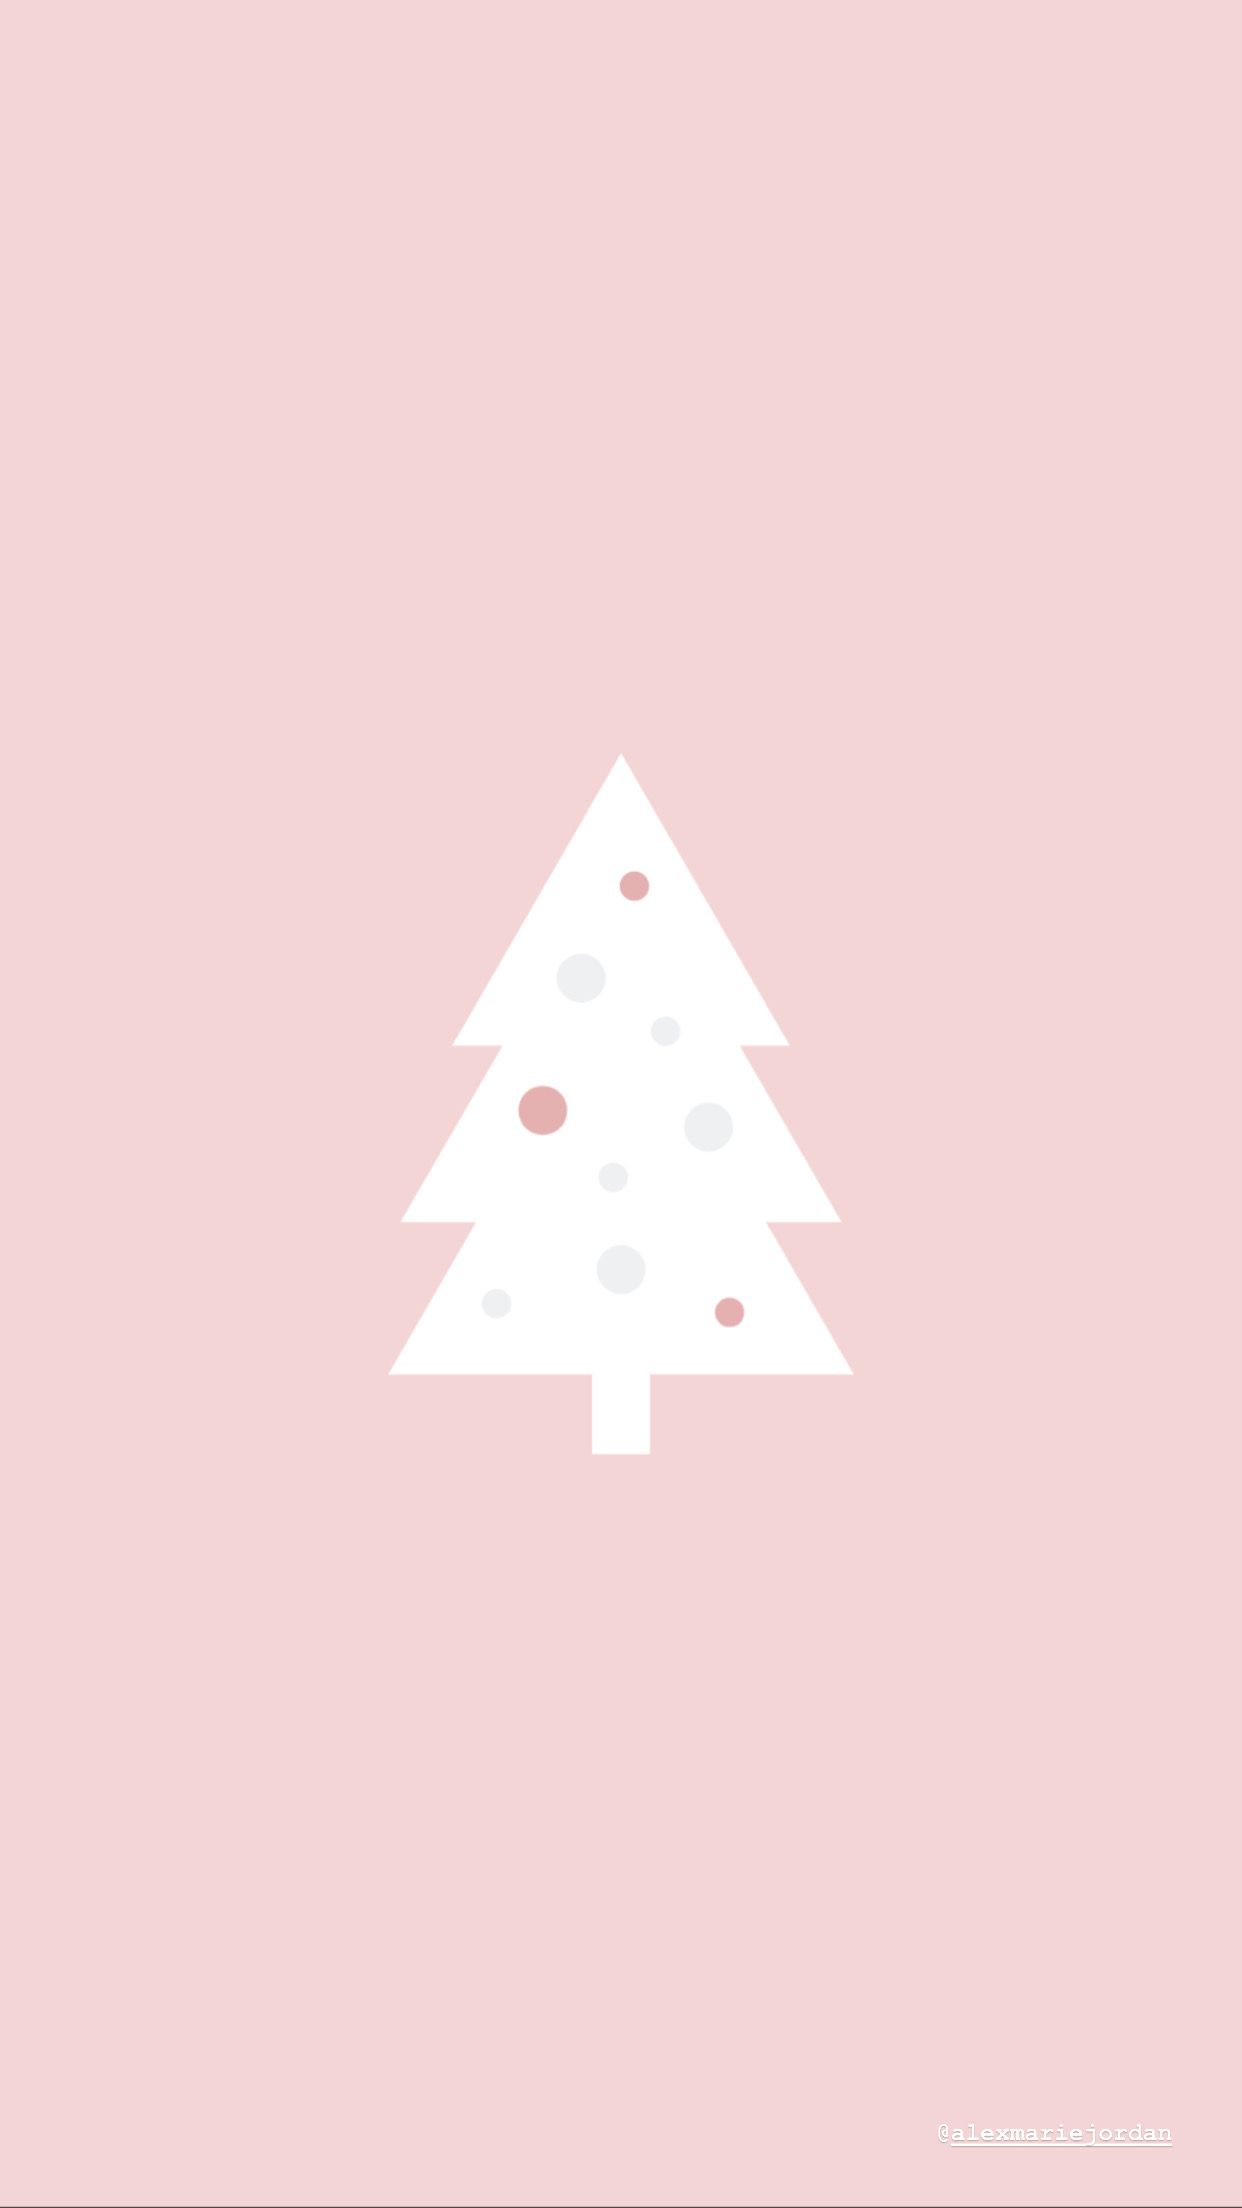 Home Page. Christmas tree wallpaper, Christmas phone background, Cute christmas wallpaper